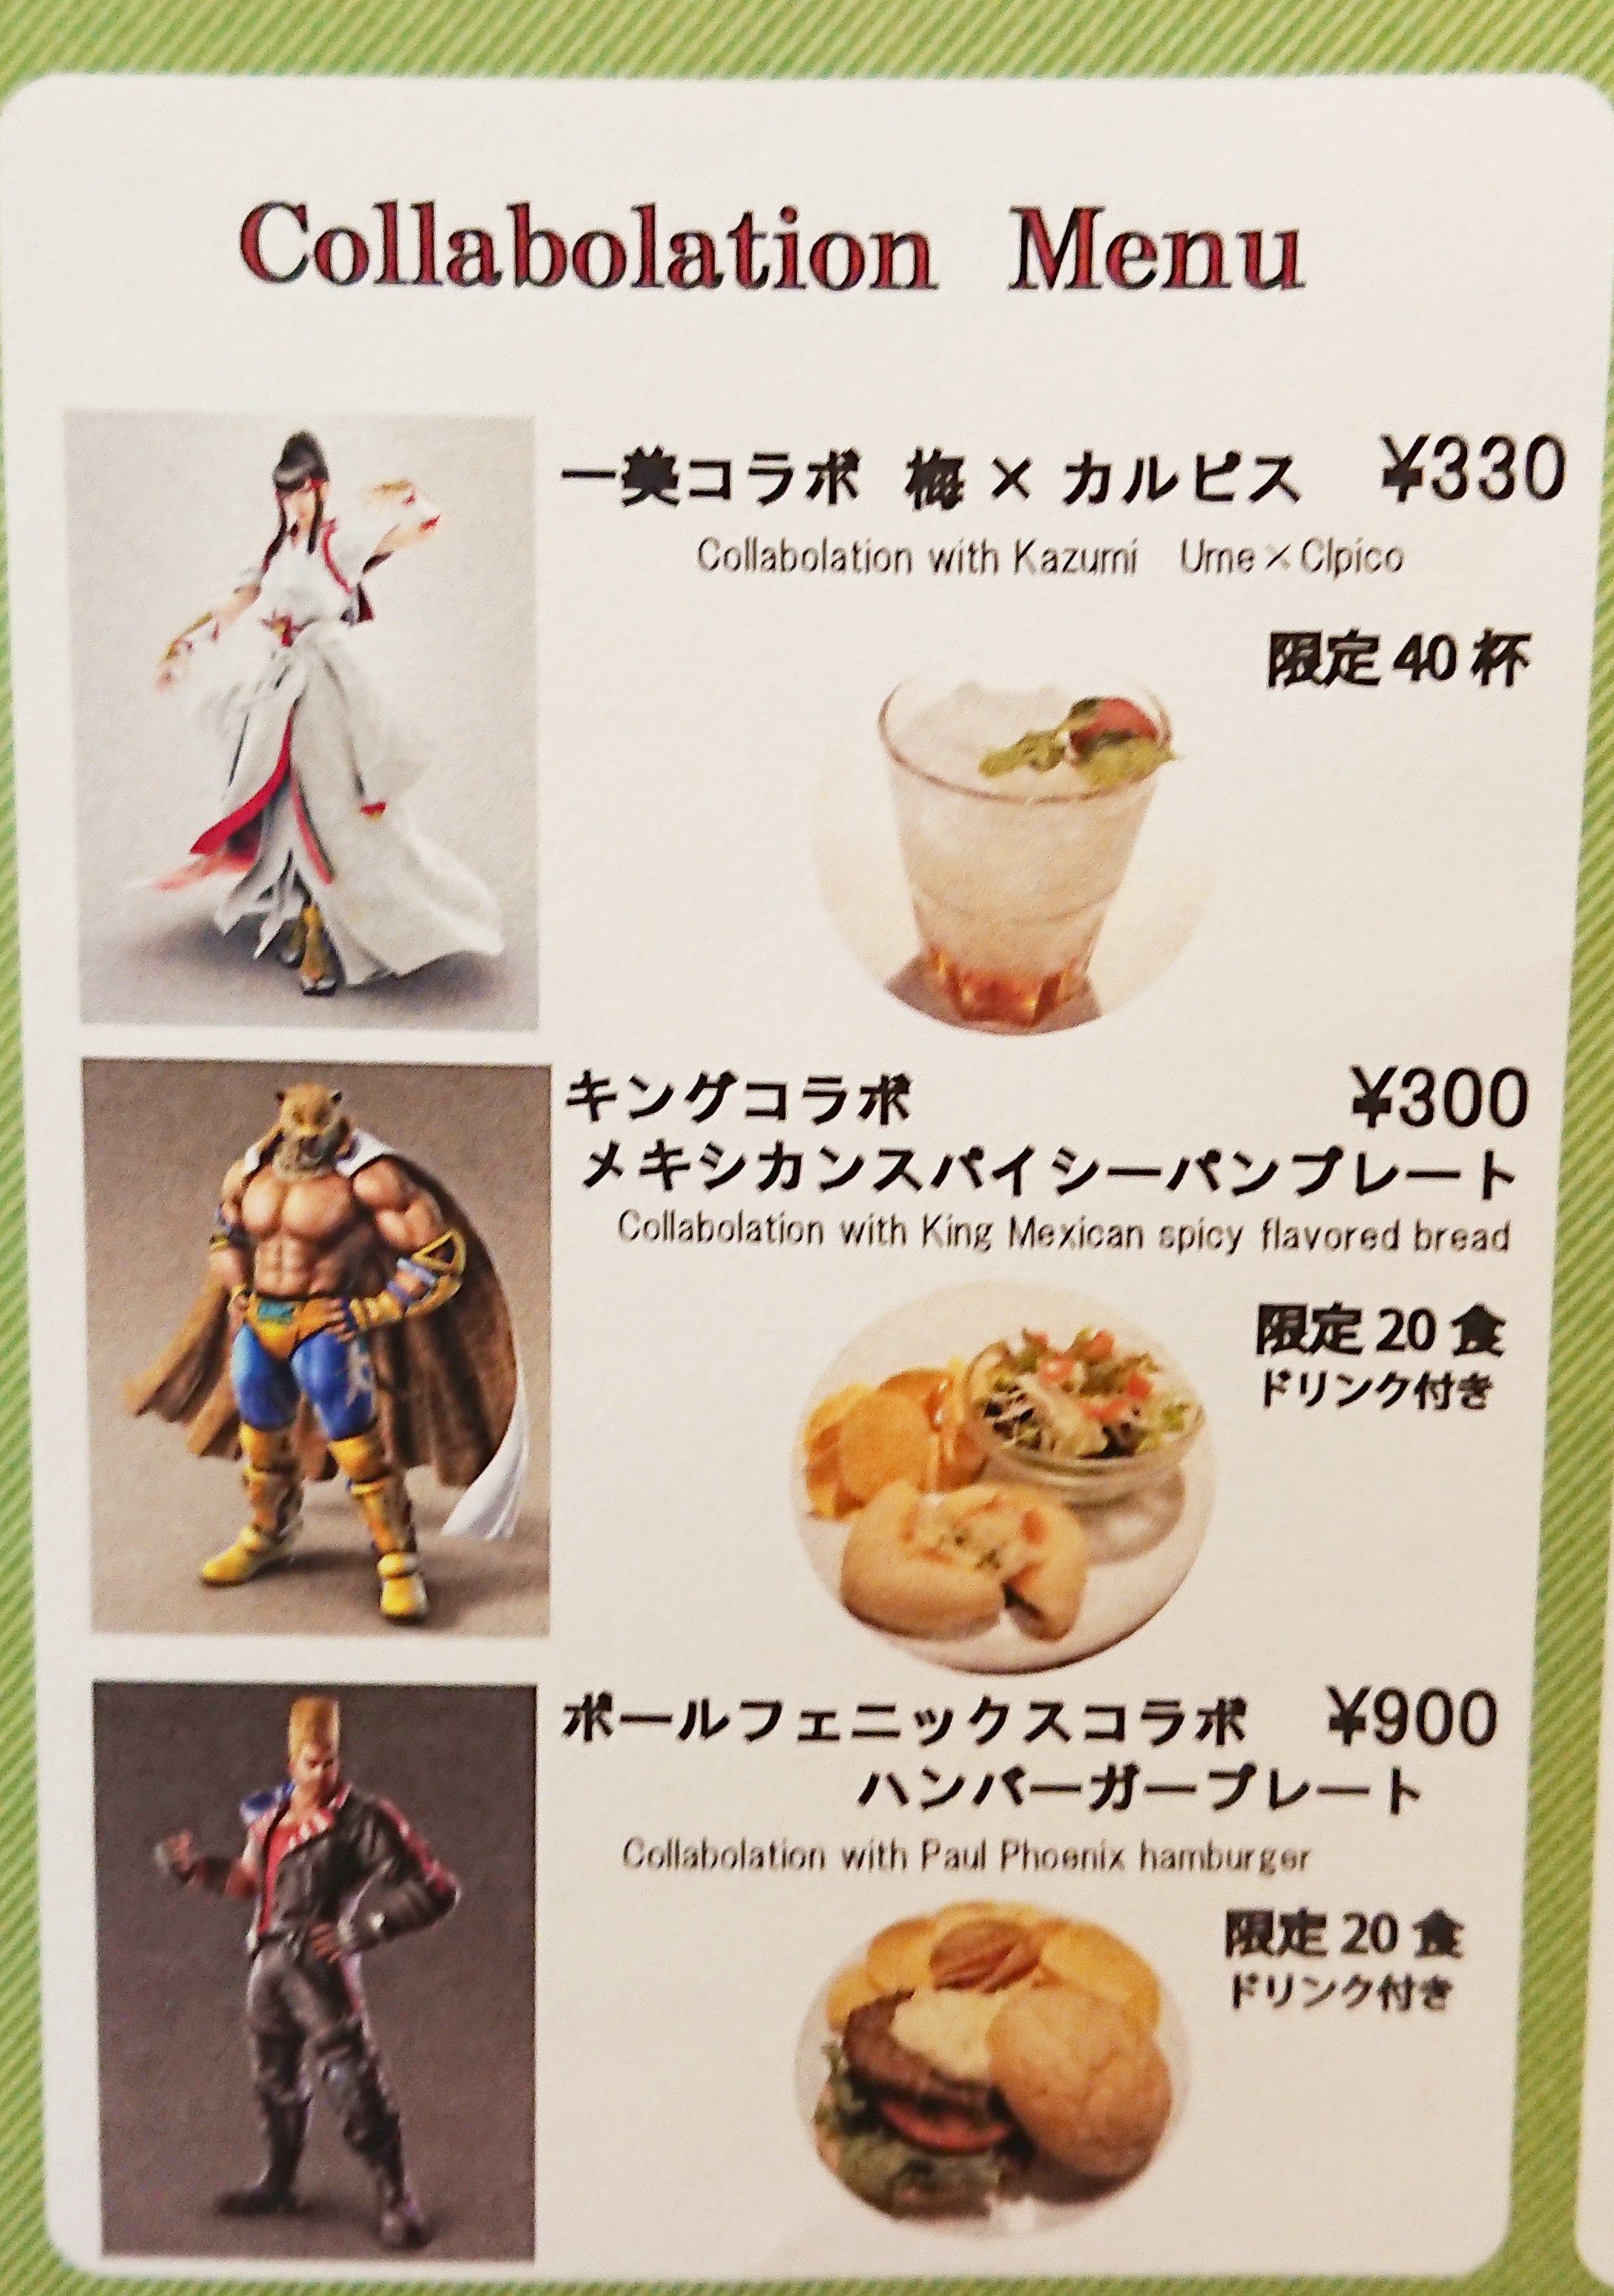 Tokyo Tekken Masters 18 8 18限定で会場食堂のイタリアントマト様が一美 キング ポールをイメージした3キャラ特別メニューの発売 Mastercup